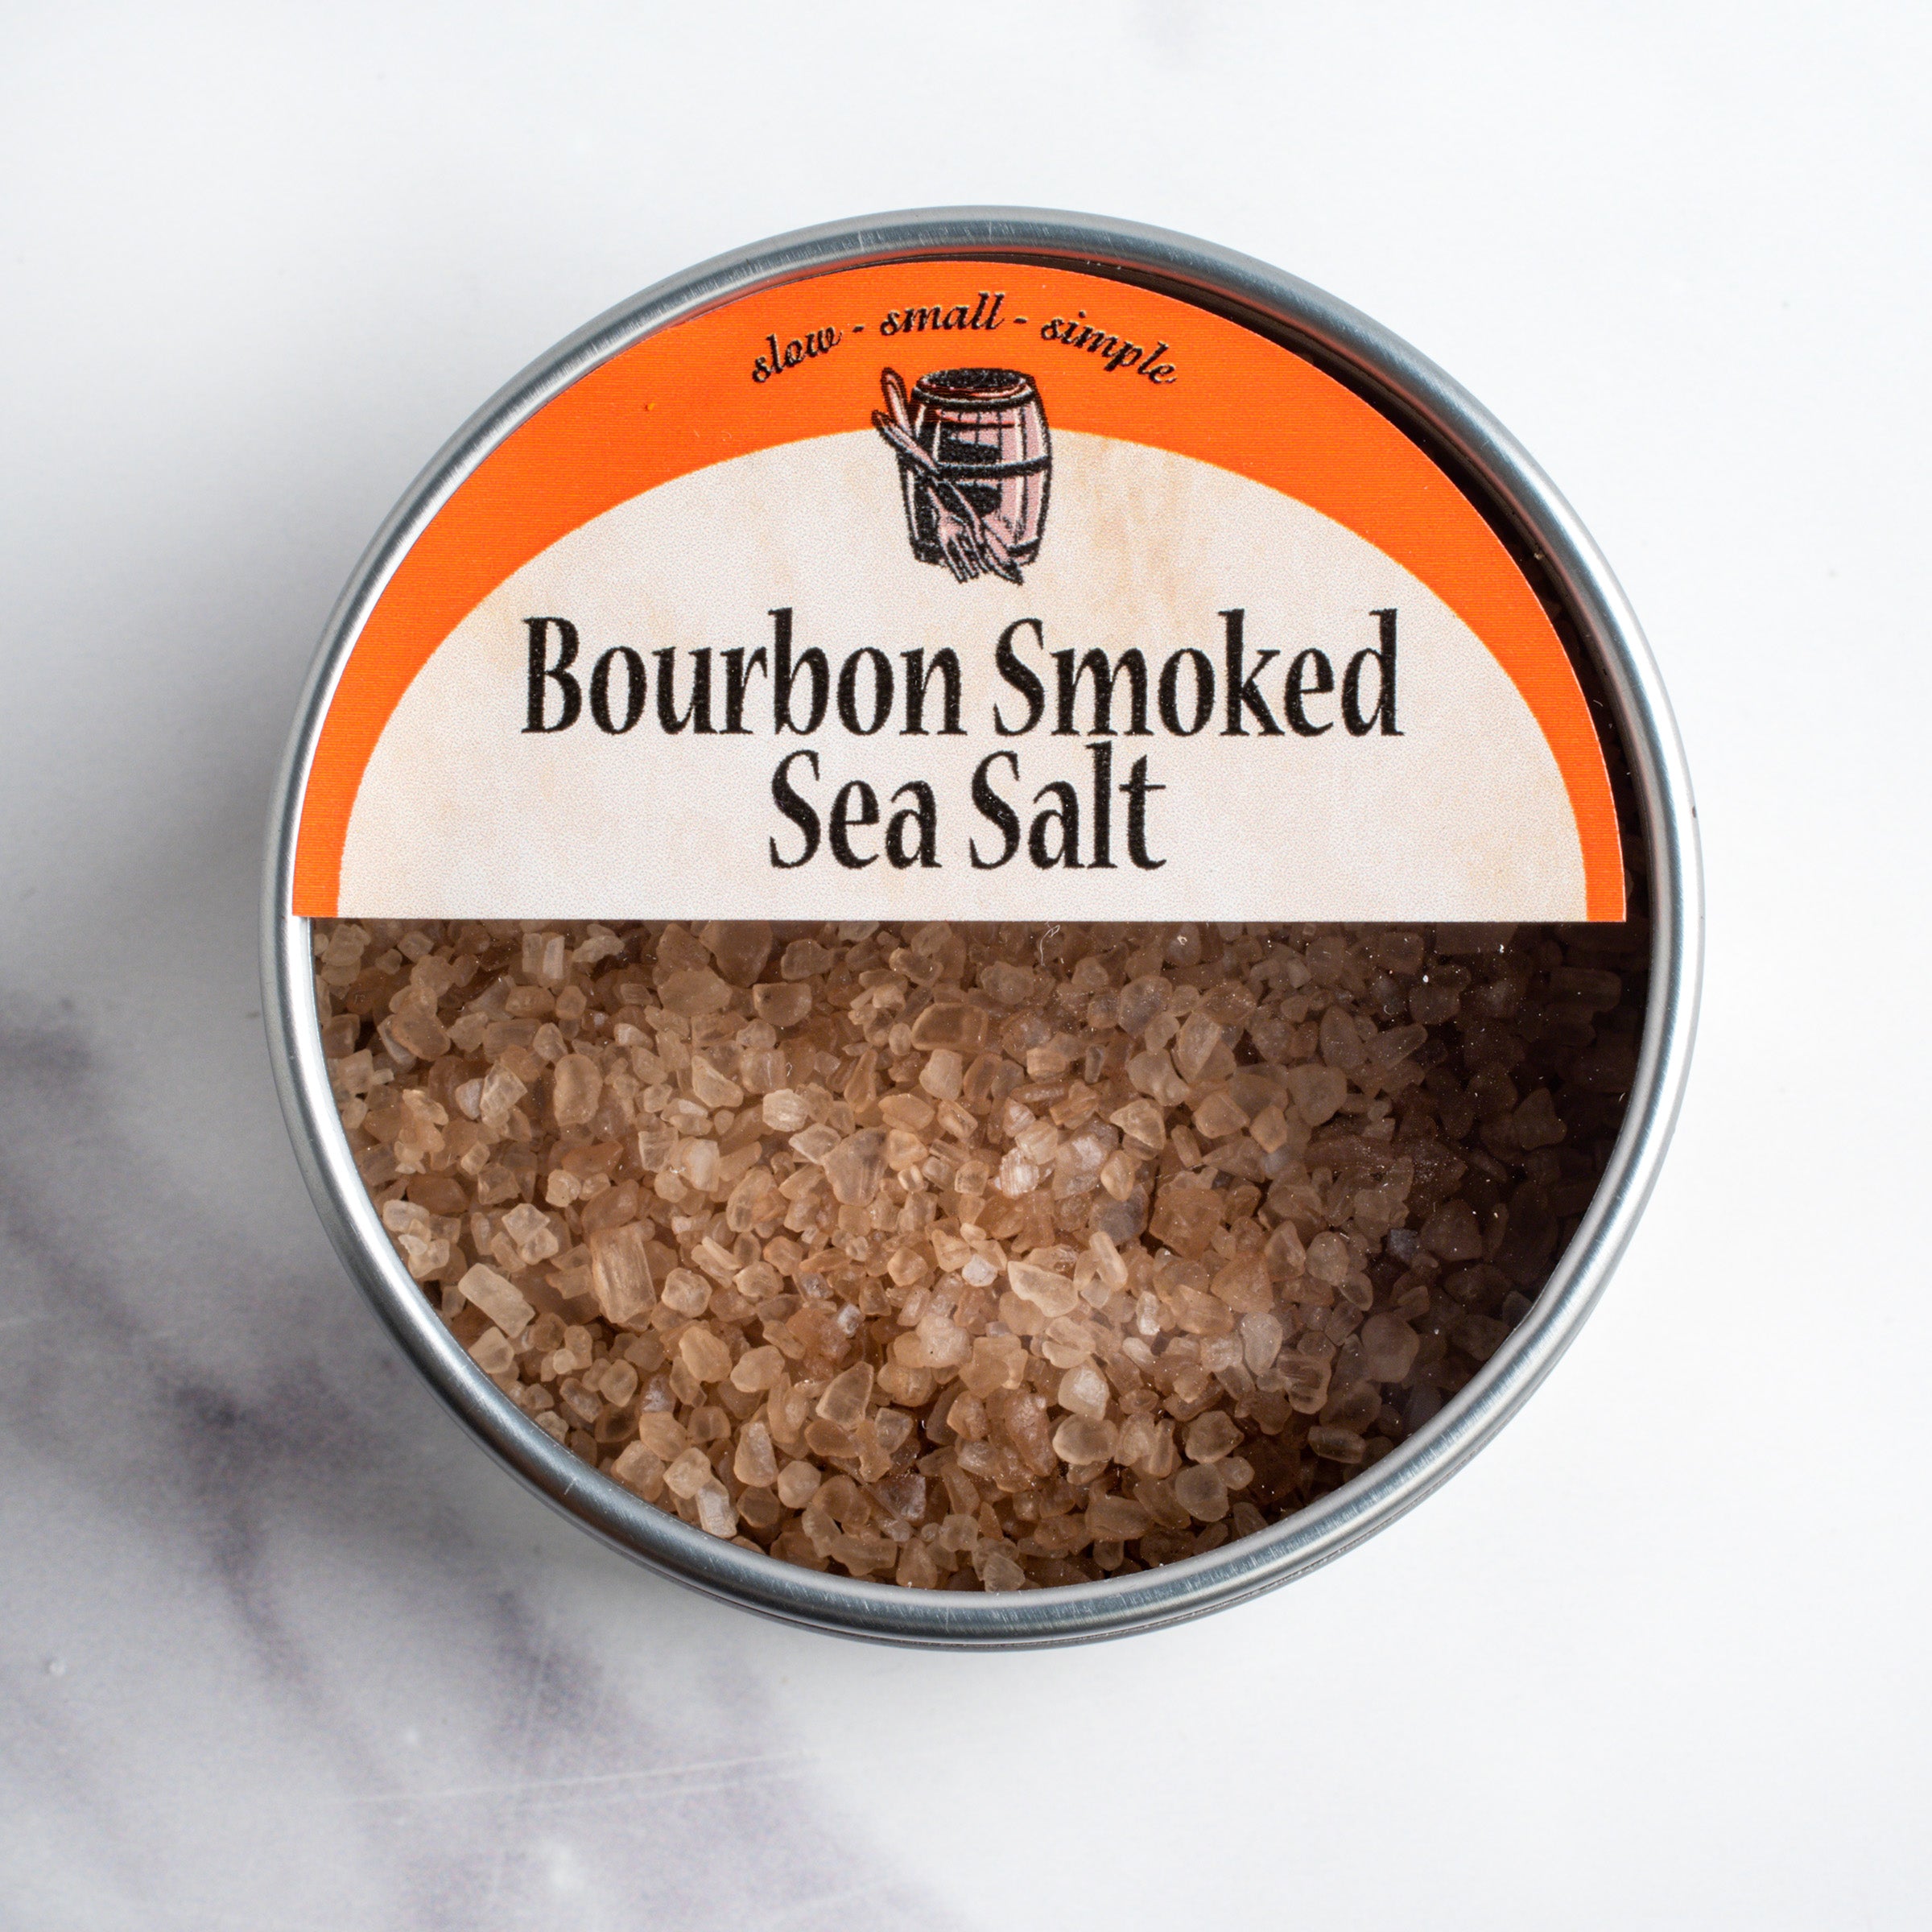 Salt/Bourbon igourmet Seasonings Spices Barrel/Rubs, & – Sea Bourbon Smoked